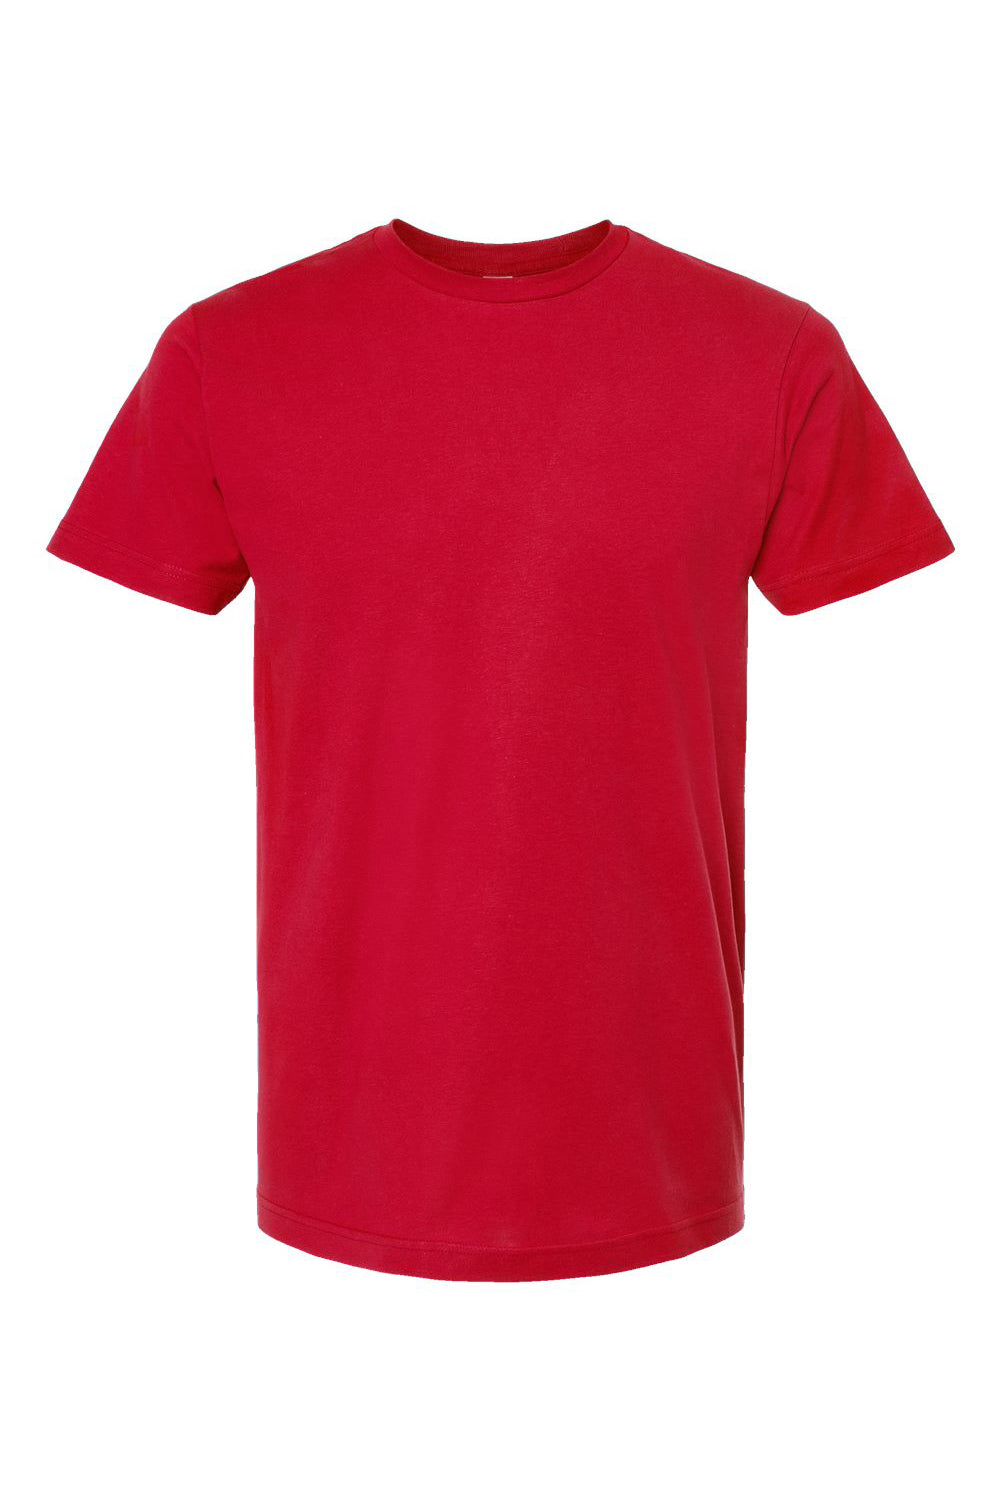 Tultex 202 Mens Fine Jersey Short Sleeve Crewneck T-Shirt Red Flat Front